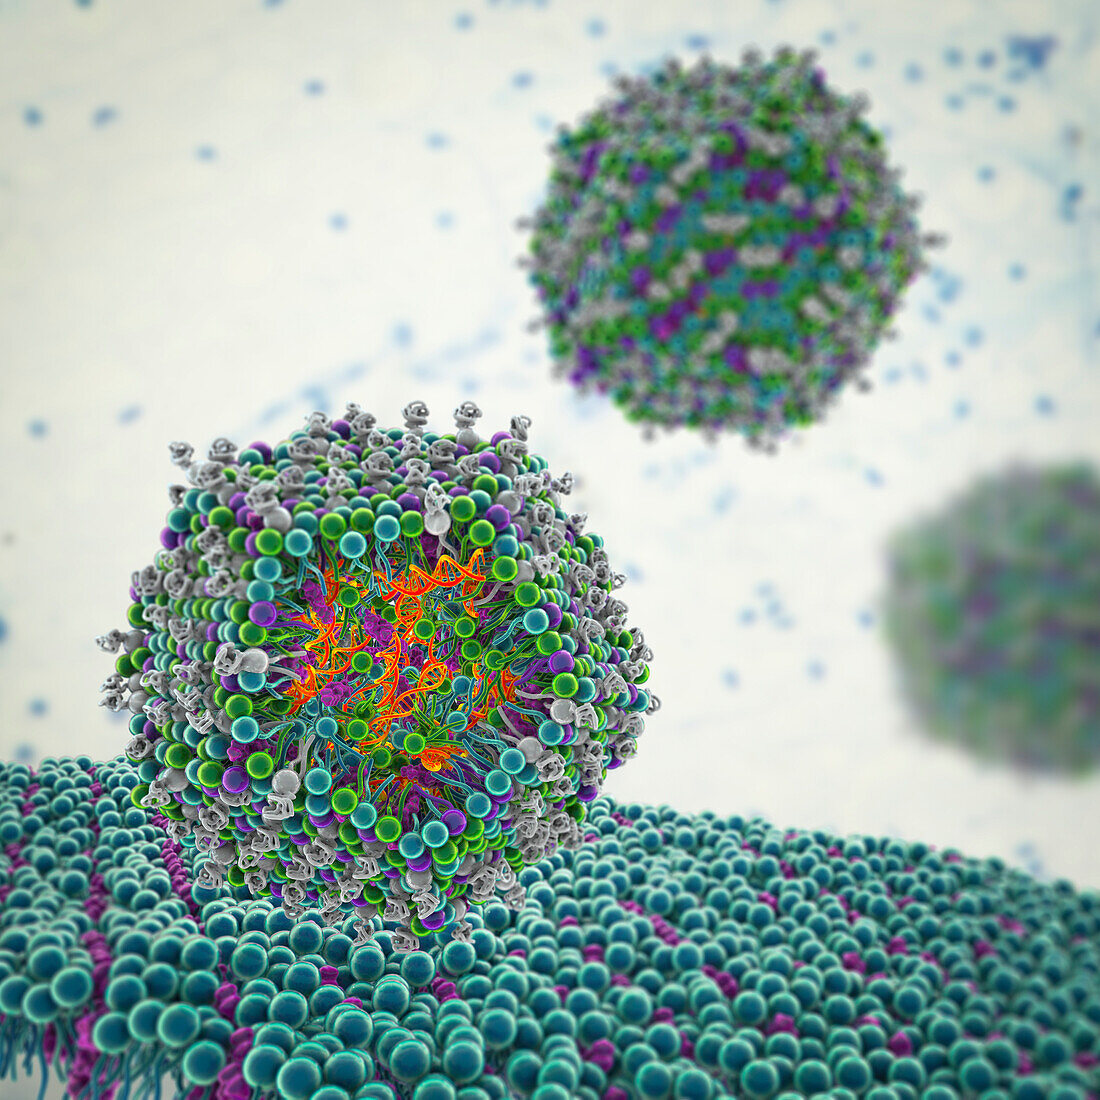 Antiviral siRNA lipid nanoparticle, illustration